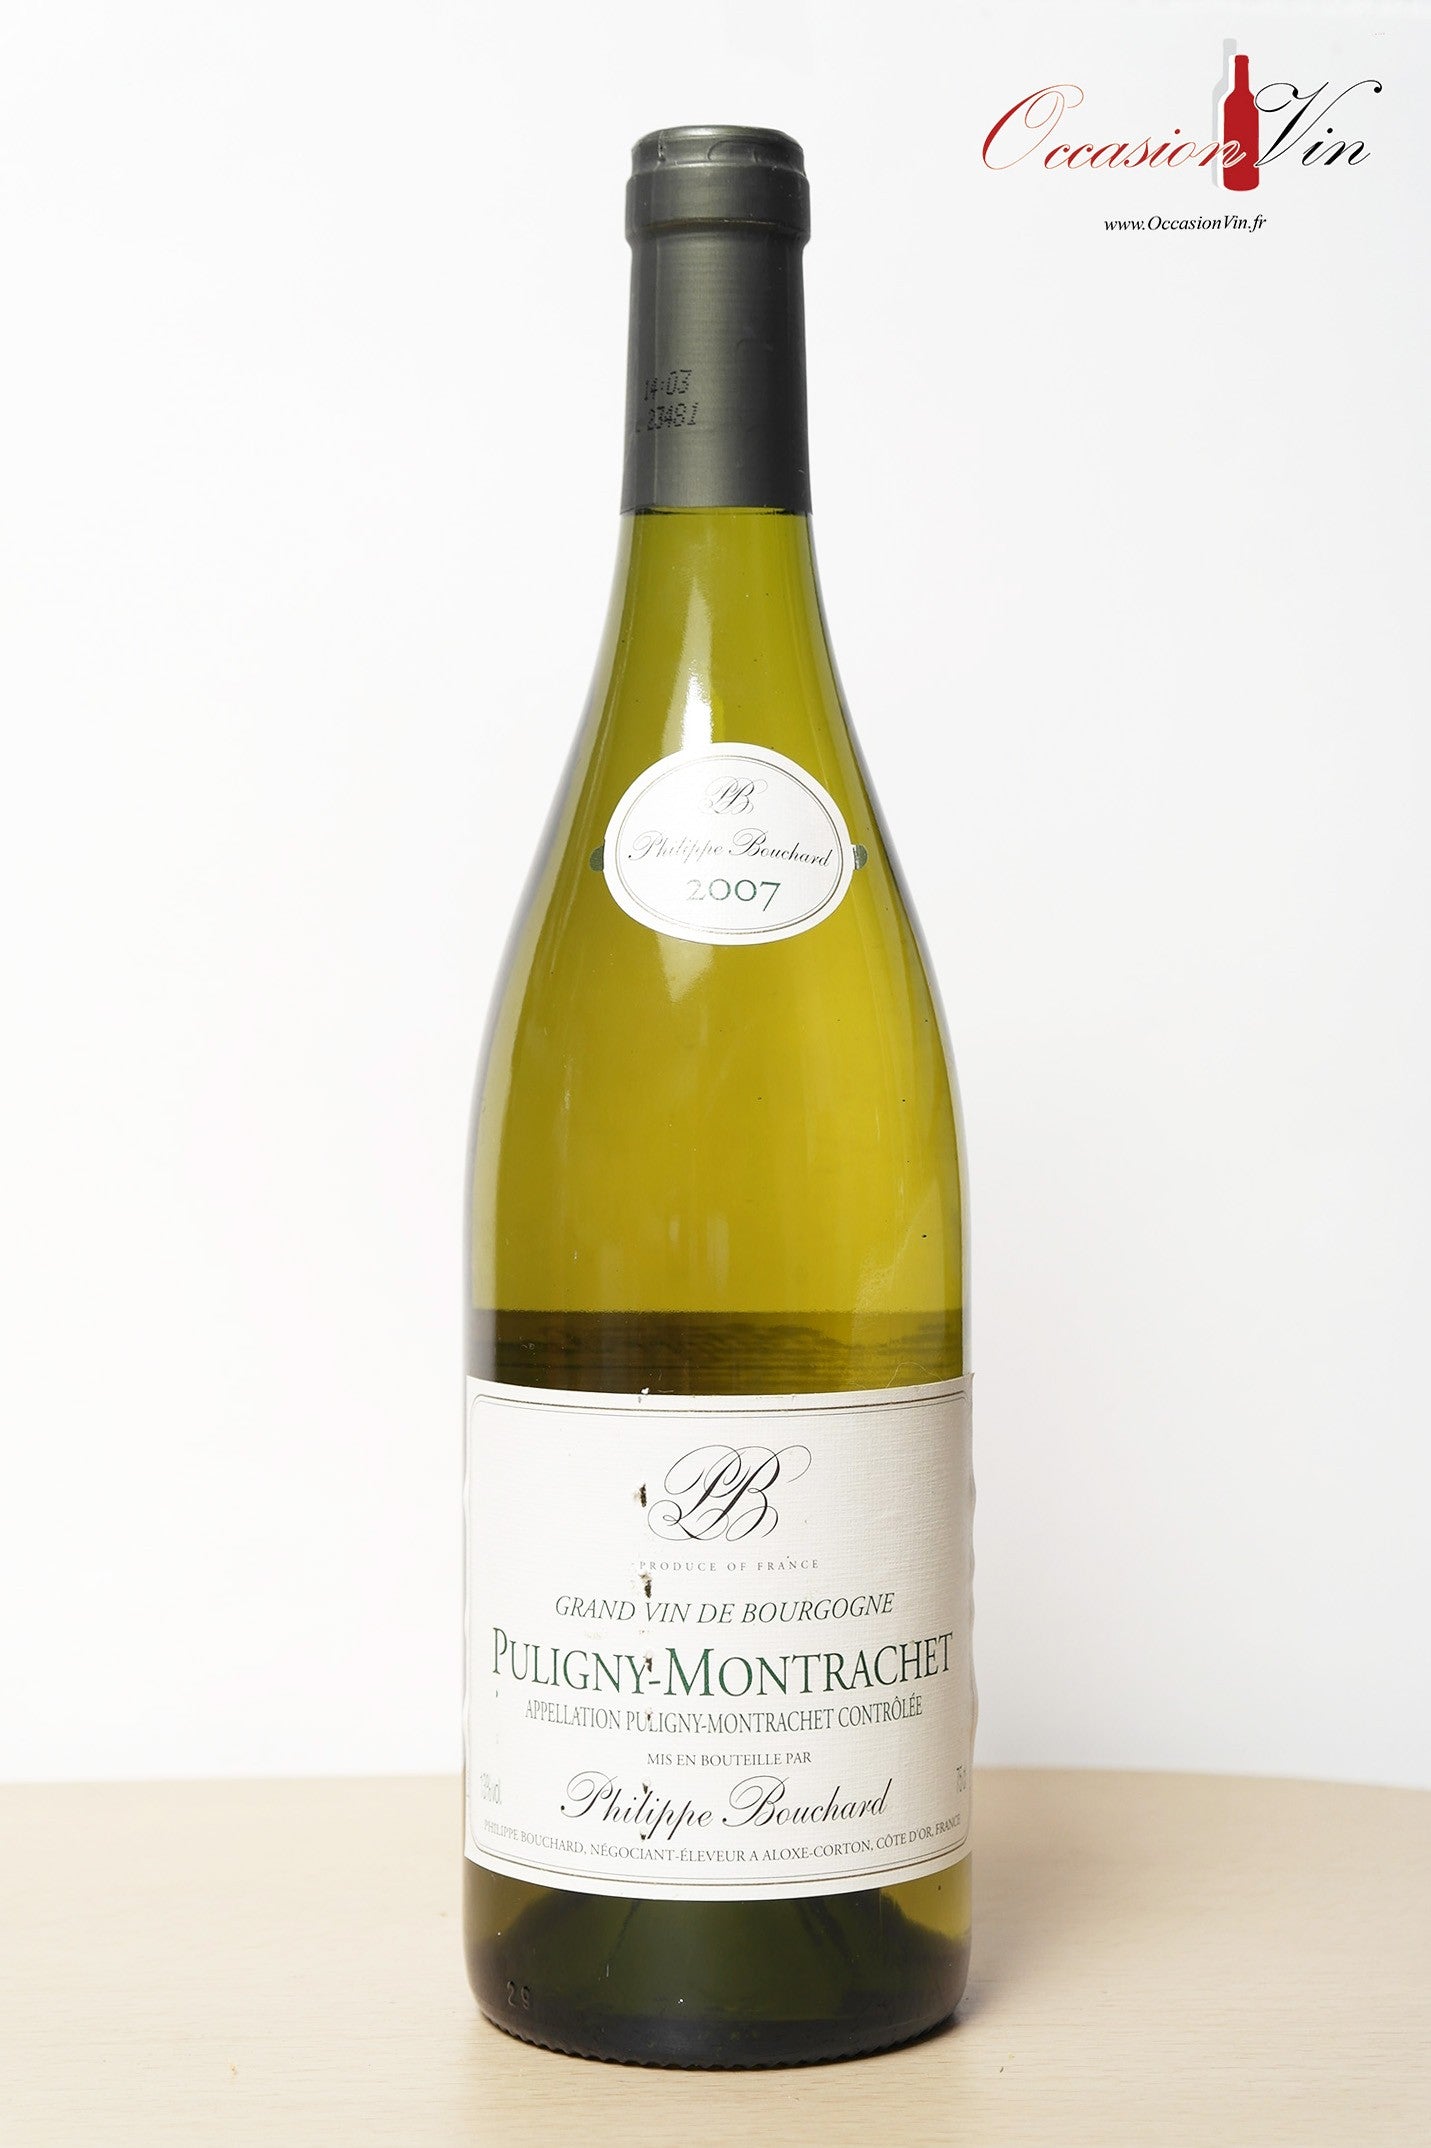 Puligny-Montrachet Philippe Bouchard Vin 2007